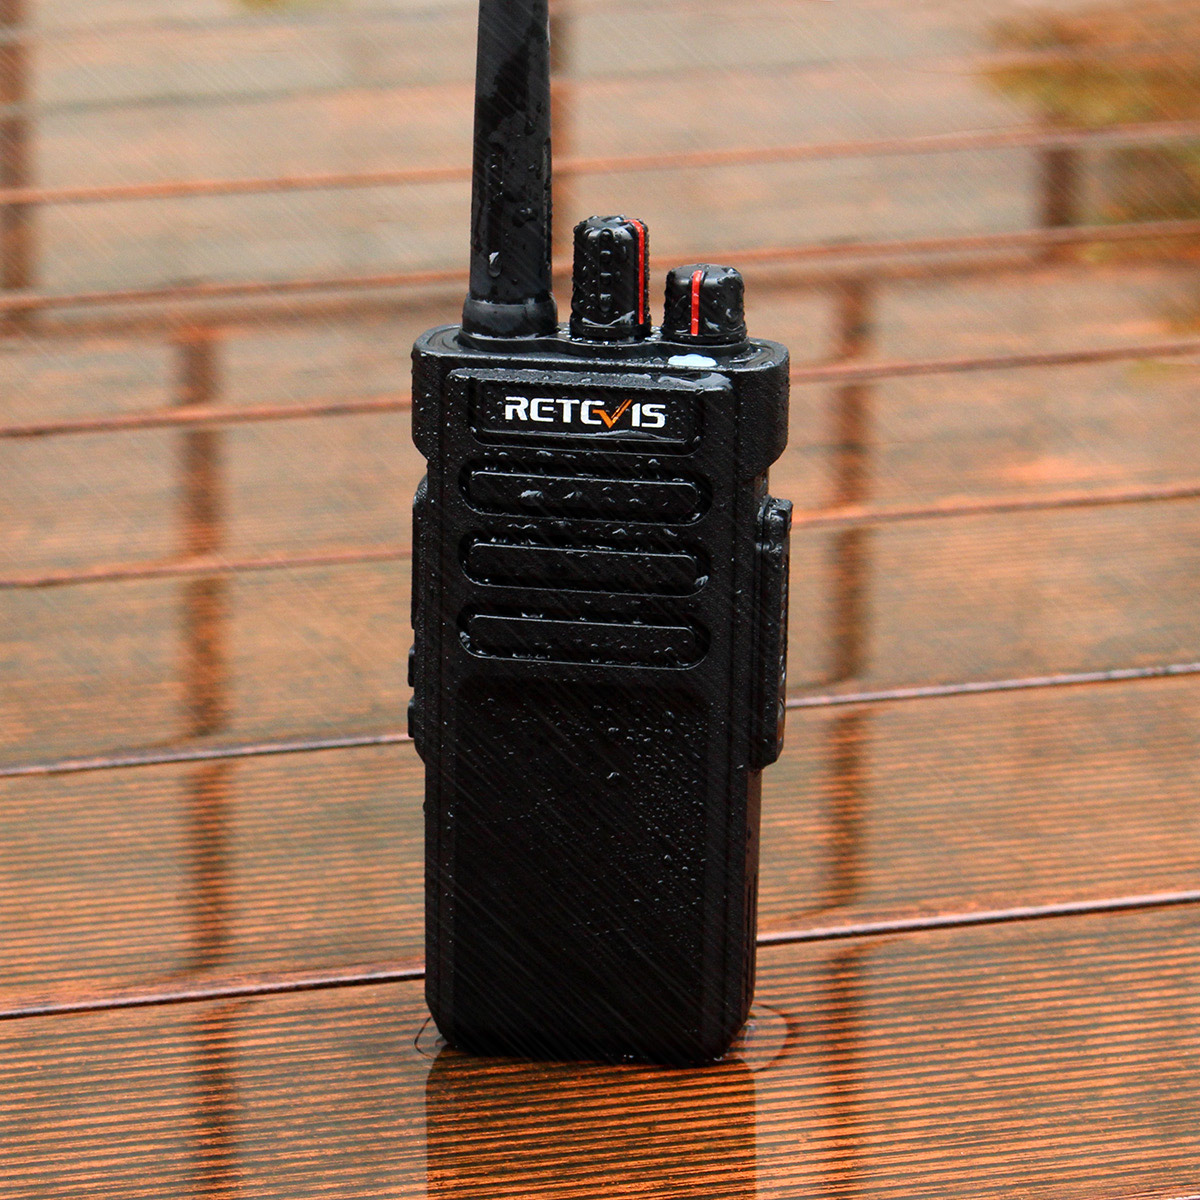 Retevis RT29 Long diatance radio